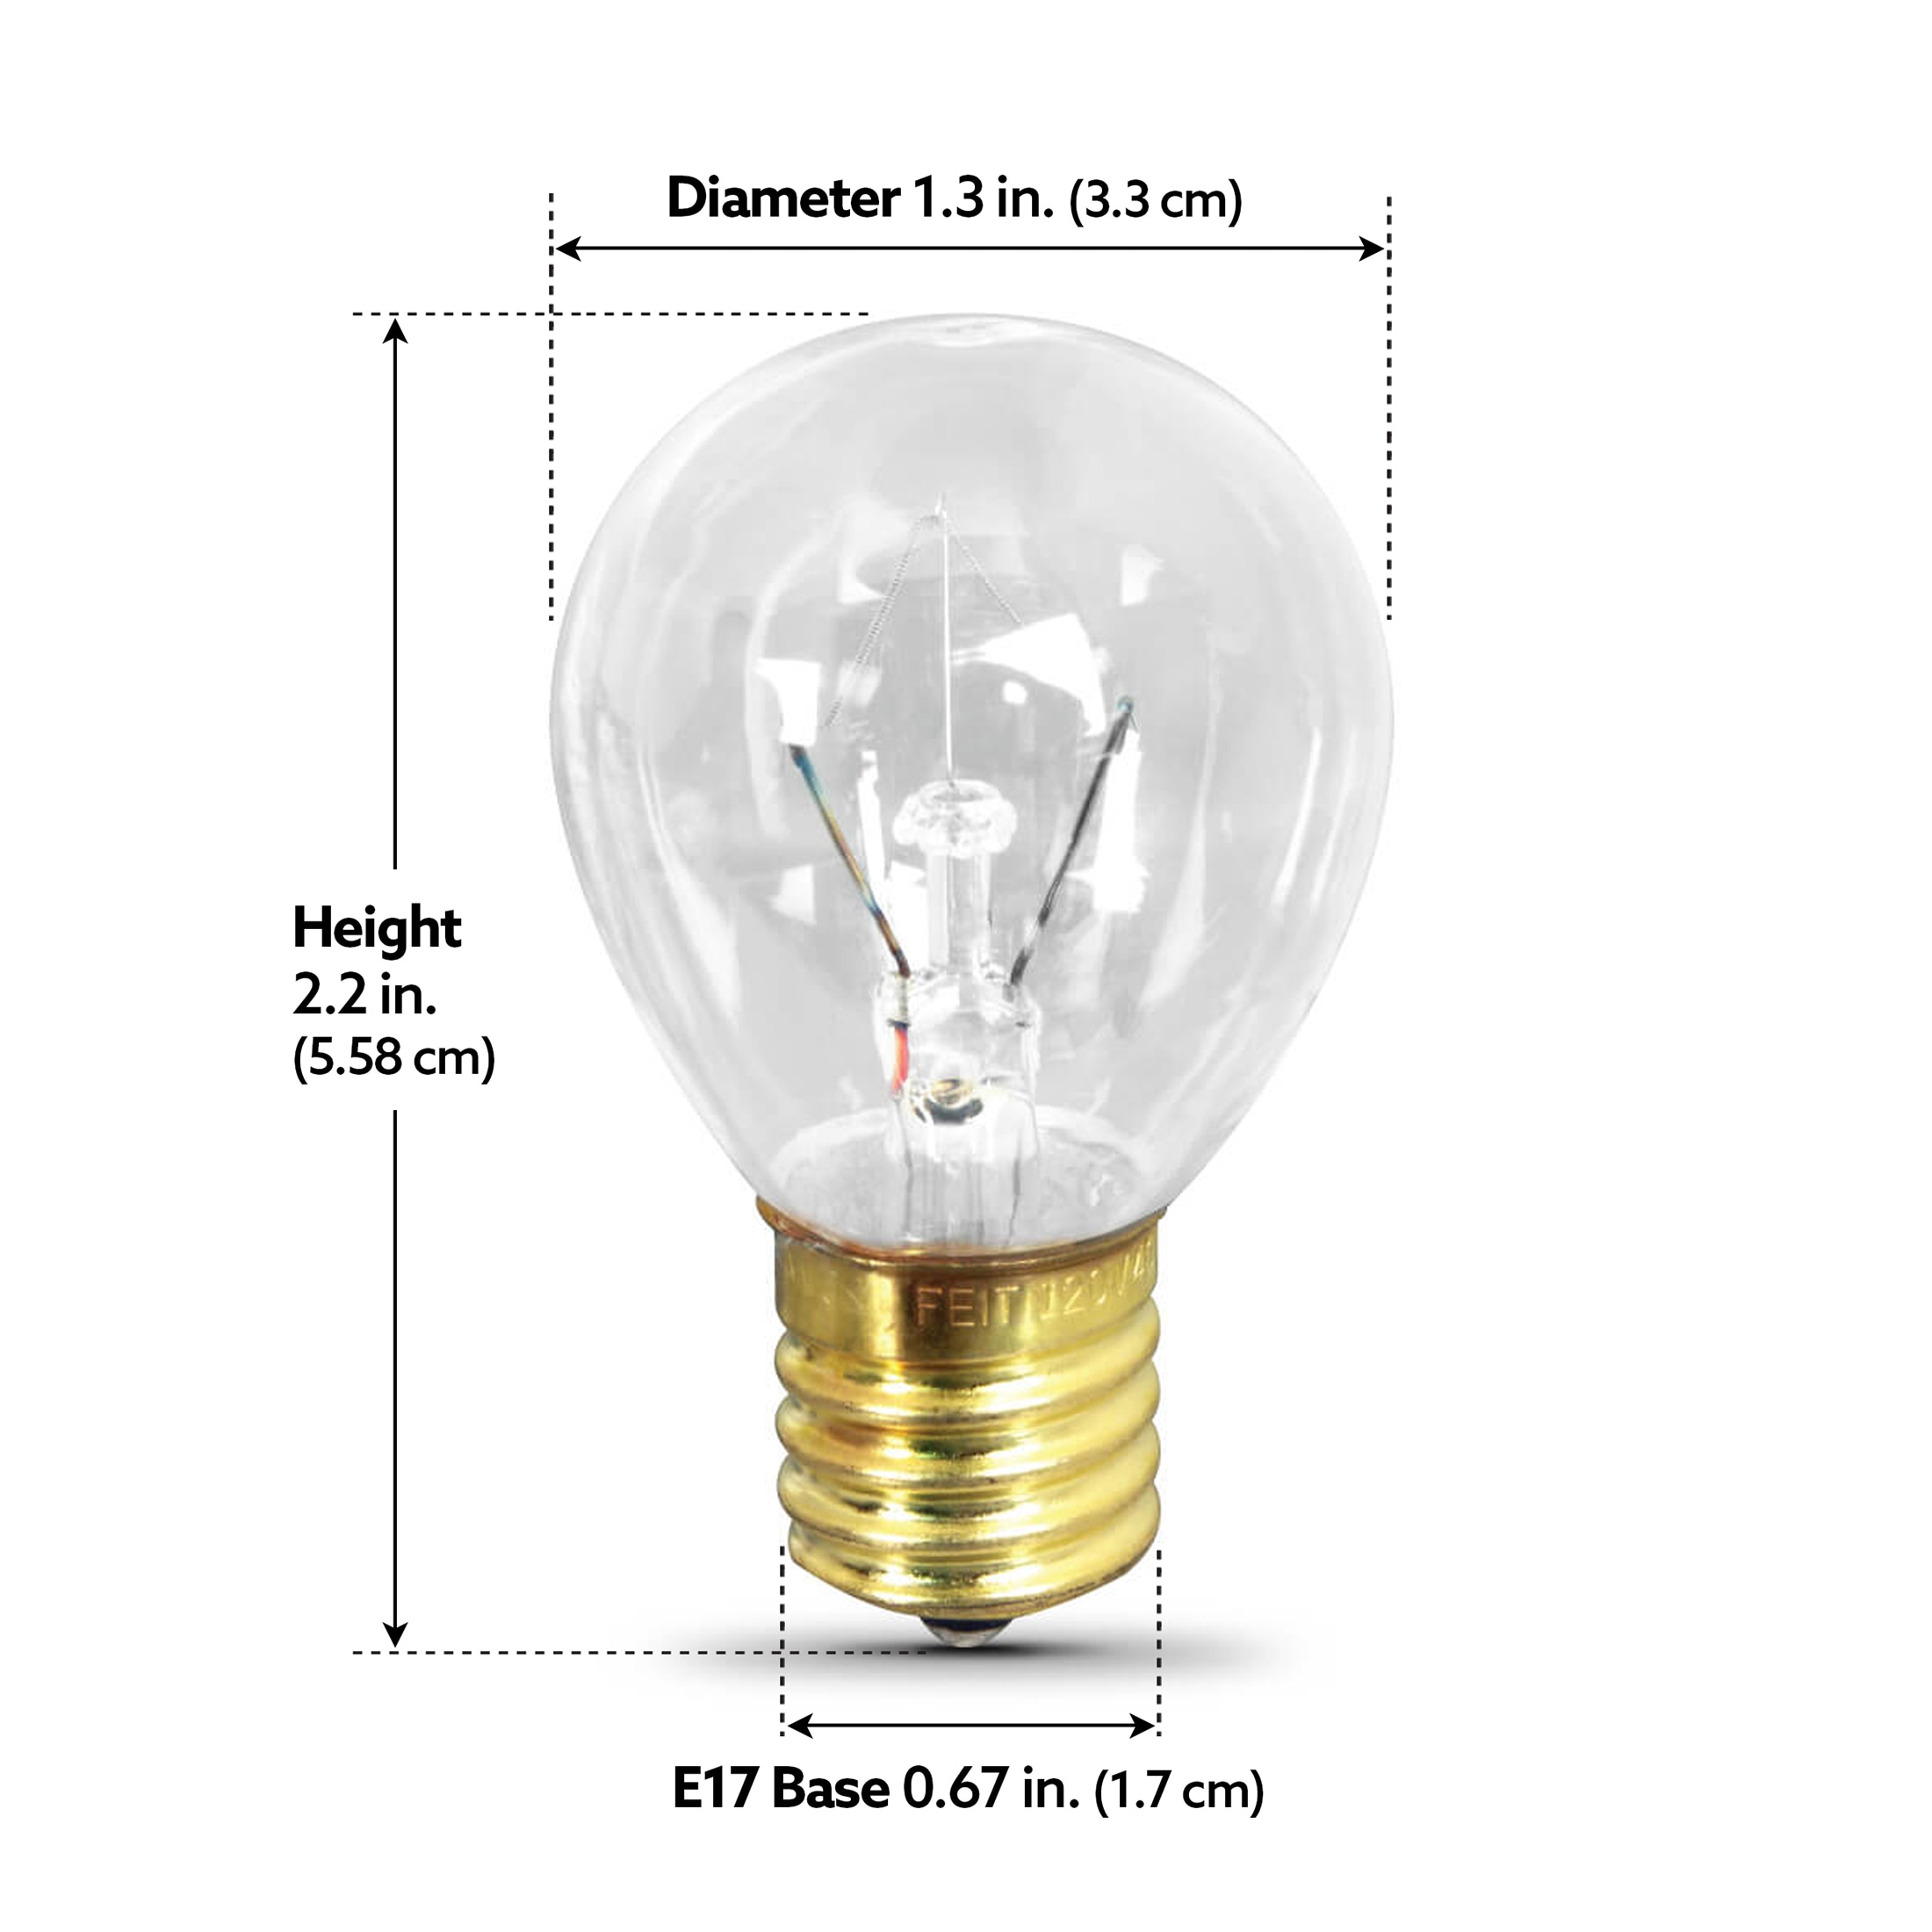 Lava Lamp Bulb 25 Watt,The Lava Original Replacement Bulb for 14.5-Inch  /20-Ounce Lava Lamp,120 Volt E17 Base Lava Lamp Replacement Bulbs,2700K  Warm White,Pack of 6 - Buy Online - 73926711